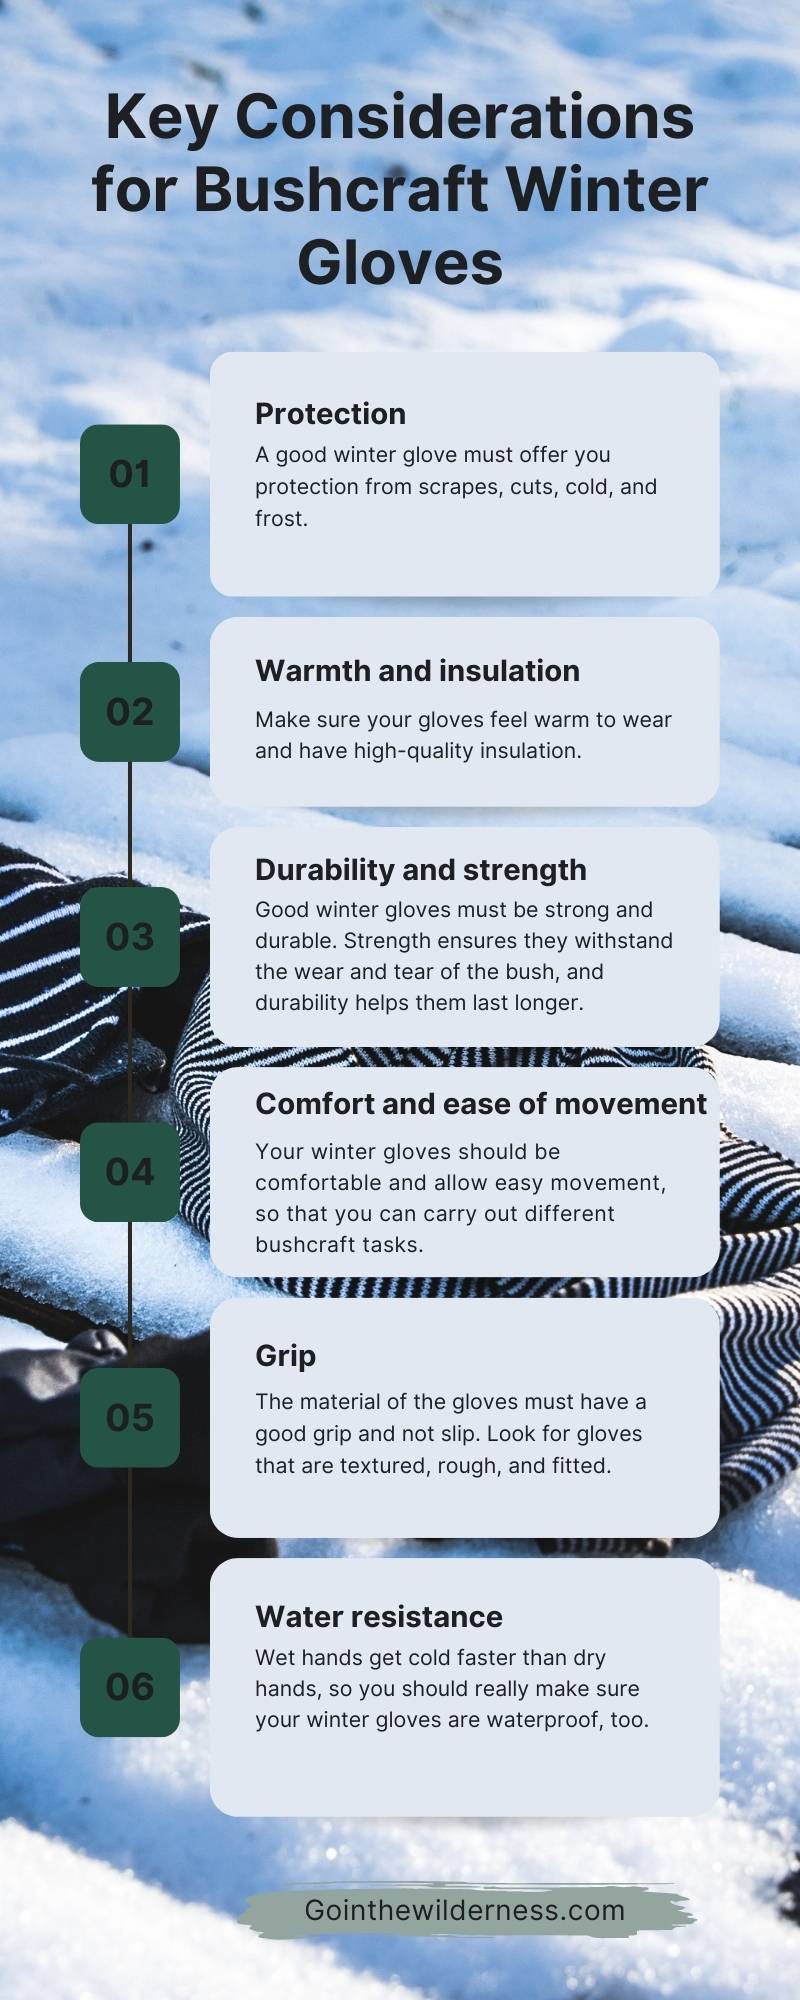 Key Considerations for Bushcraft Winter Gloves